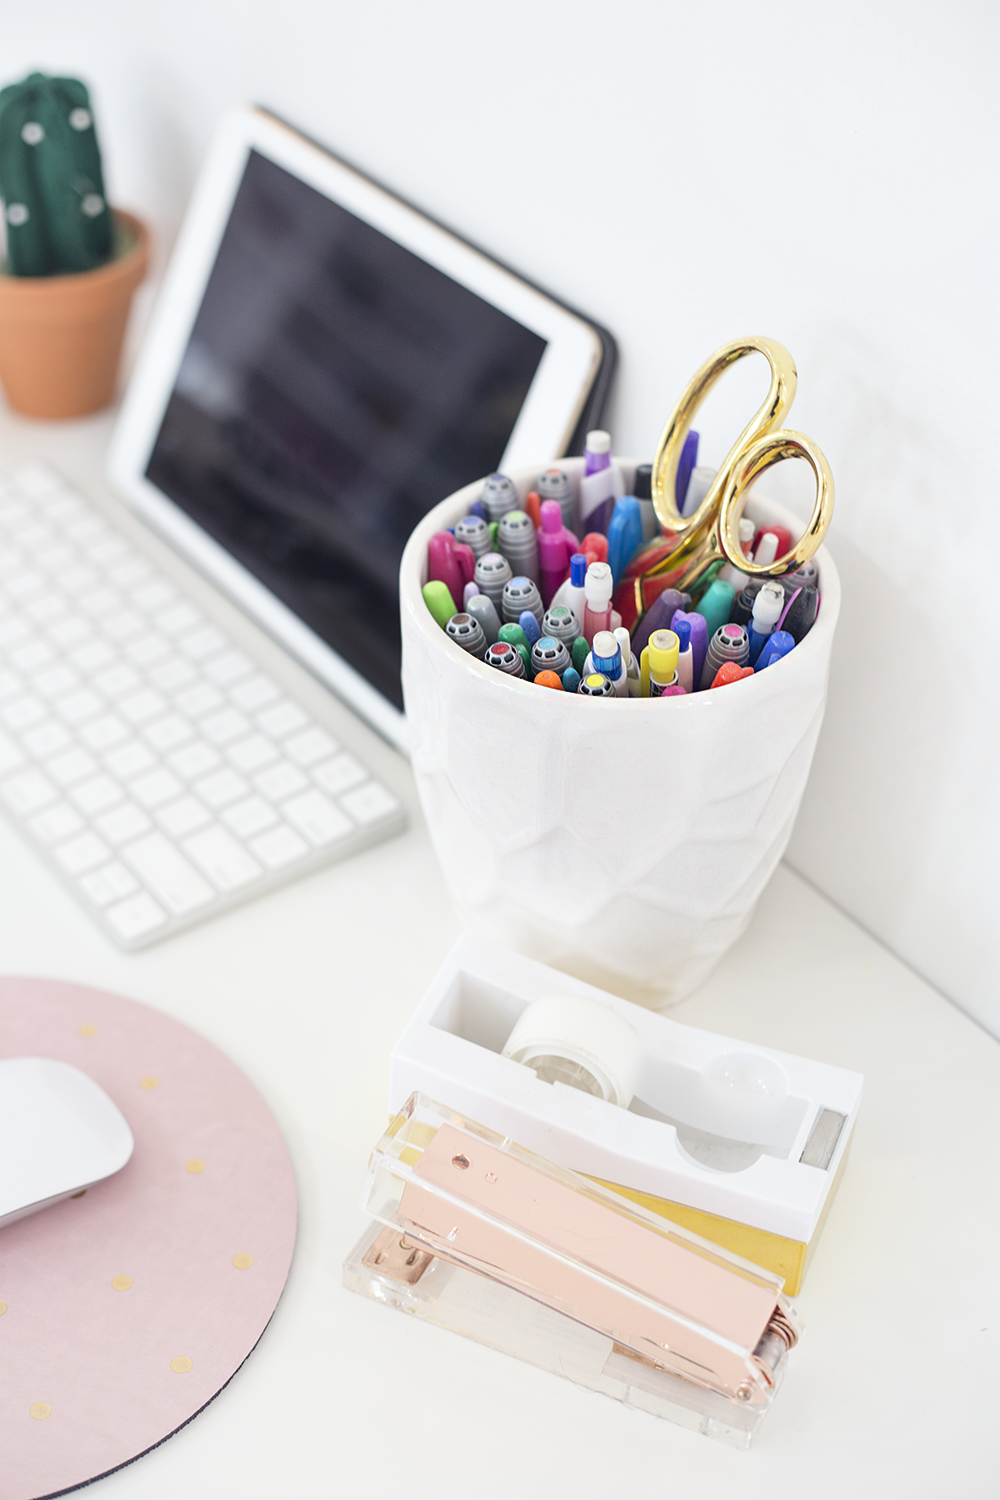 reorganize your desk | desk ideas | desk organization